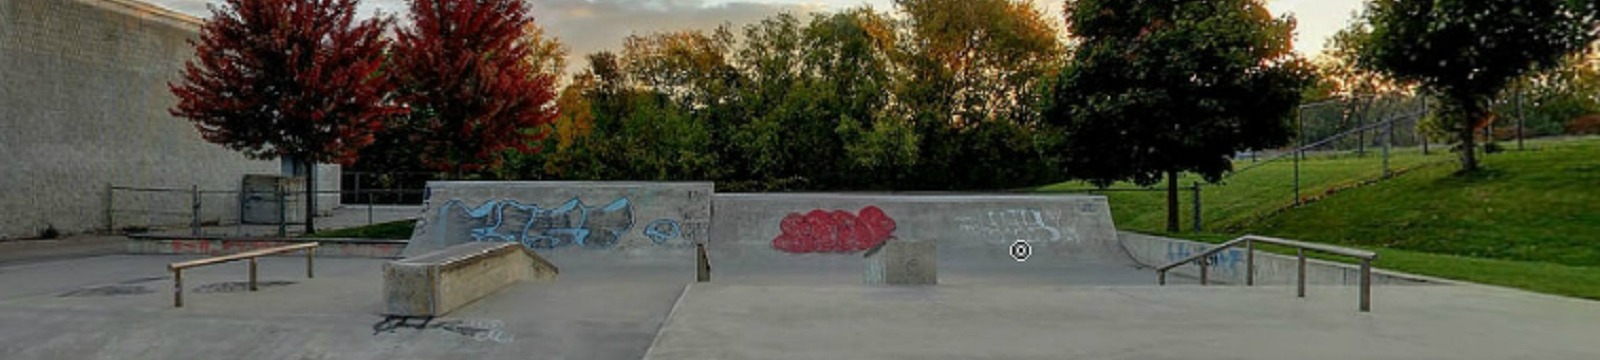 Donevan Recreation Complex skateboard park